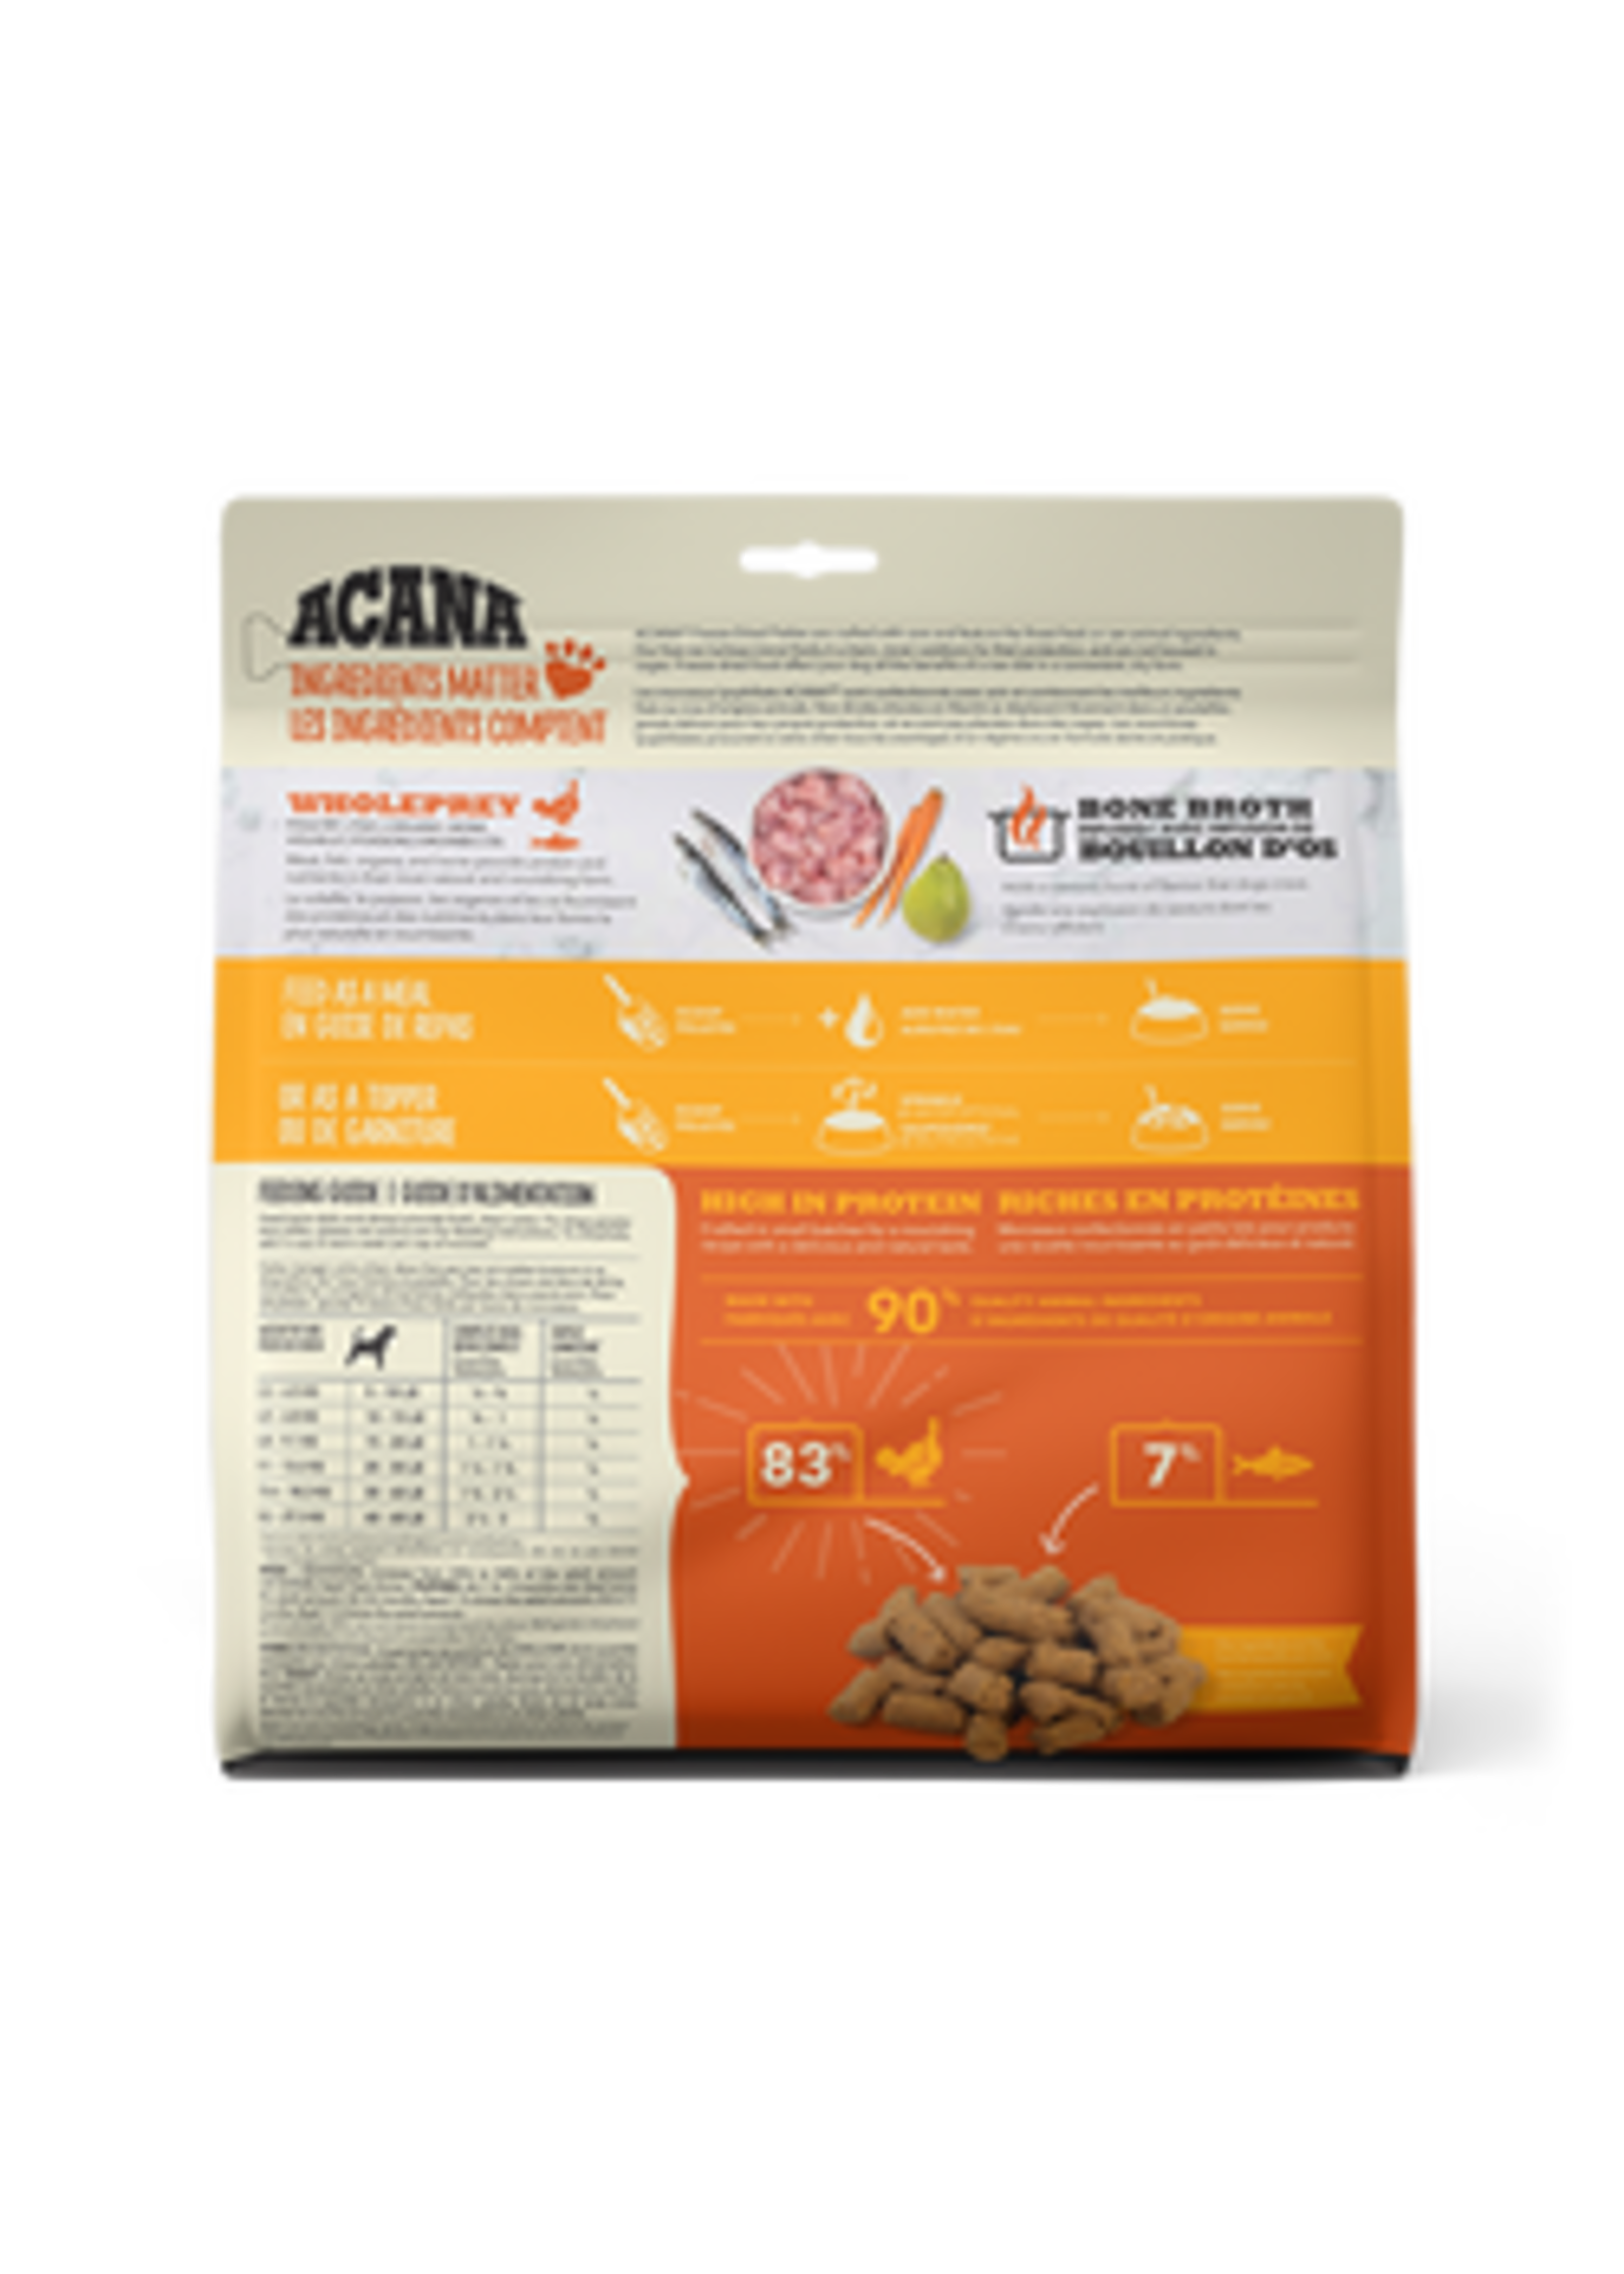 Acana Acana Freeze-Dried Morsels (227g) Free-Run Turkey Recipe